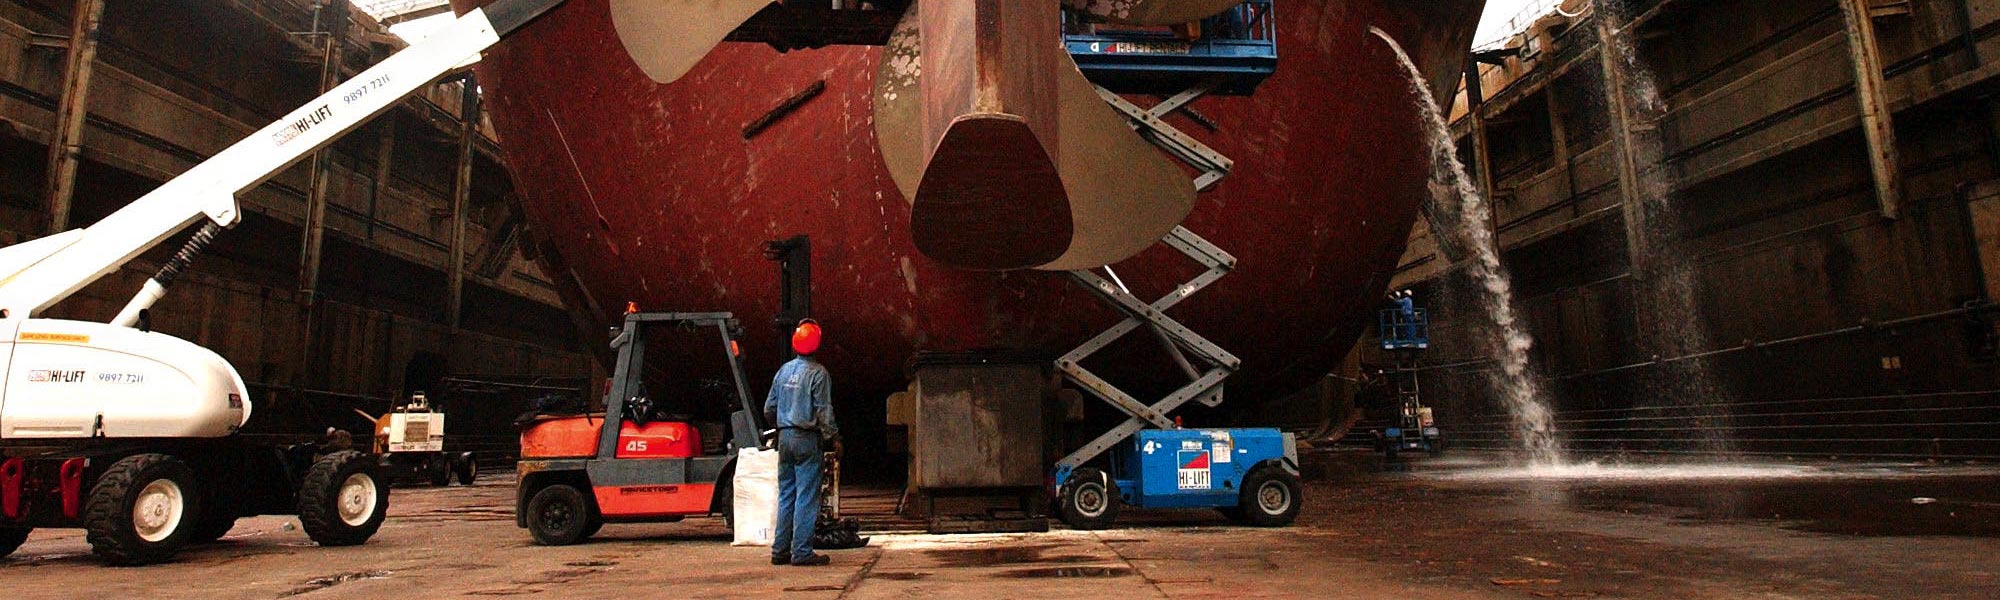 A large ship undergoing maintenance.